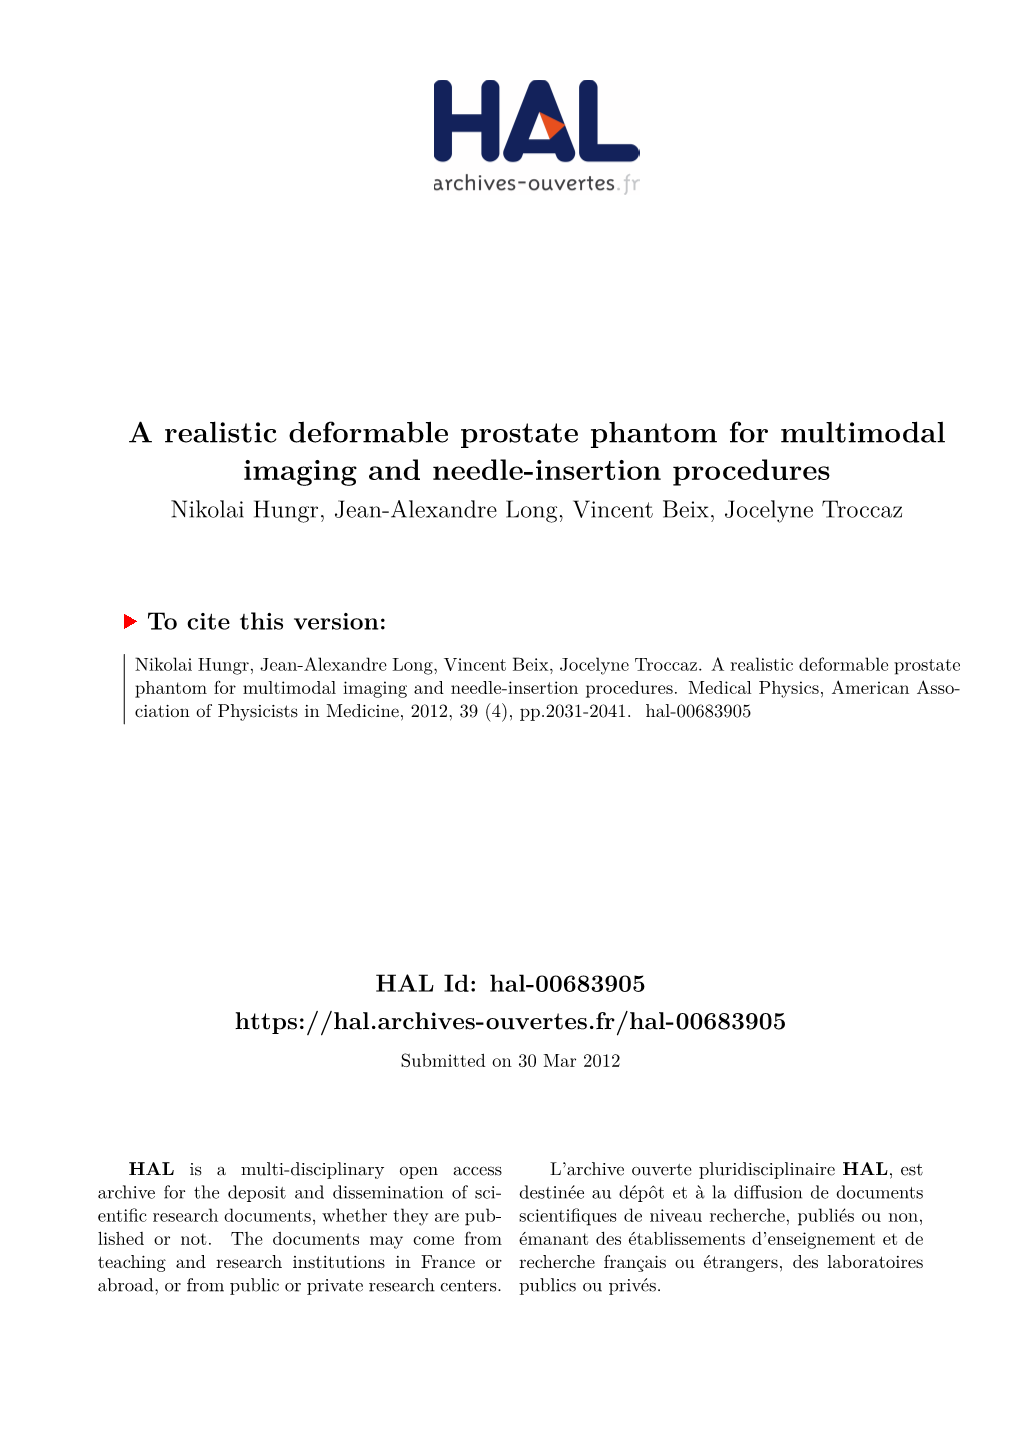 A Realistic Deformable Prostate Phantom for Multimodal Imaging and Needle-Insertion Procedures Nikolai Hungr, Jean-Alexandre Long, Vincent Beix, Jocelyne Troccaz